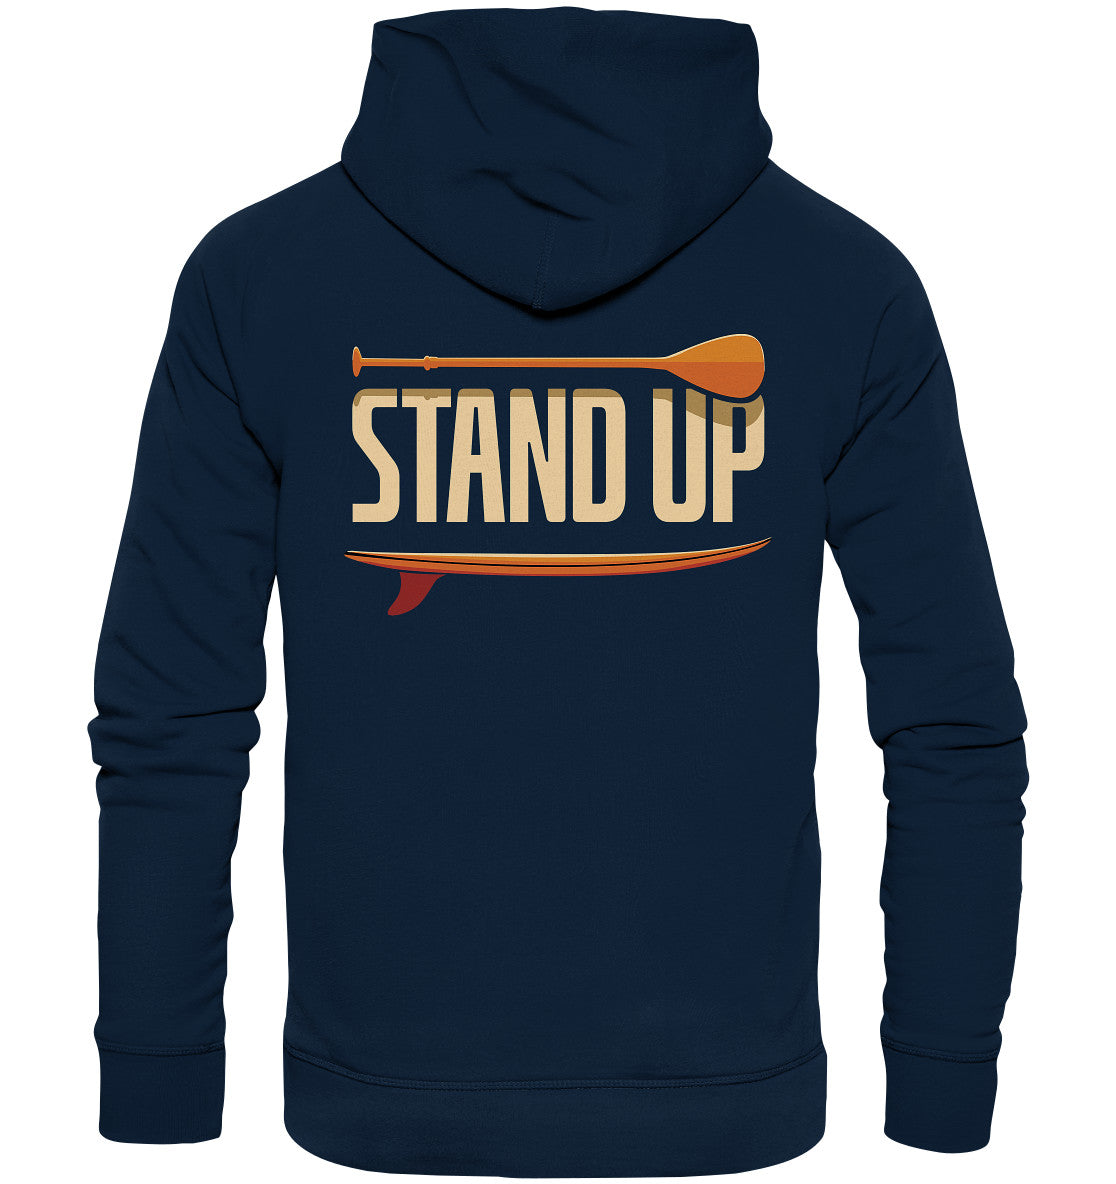 Stand UP - Organic Hoodie